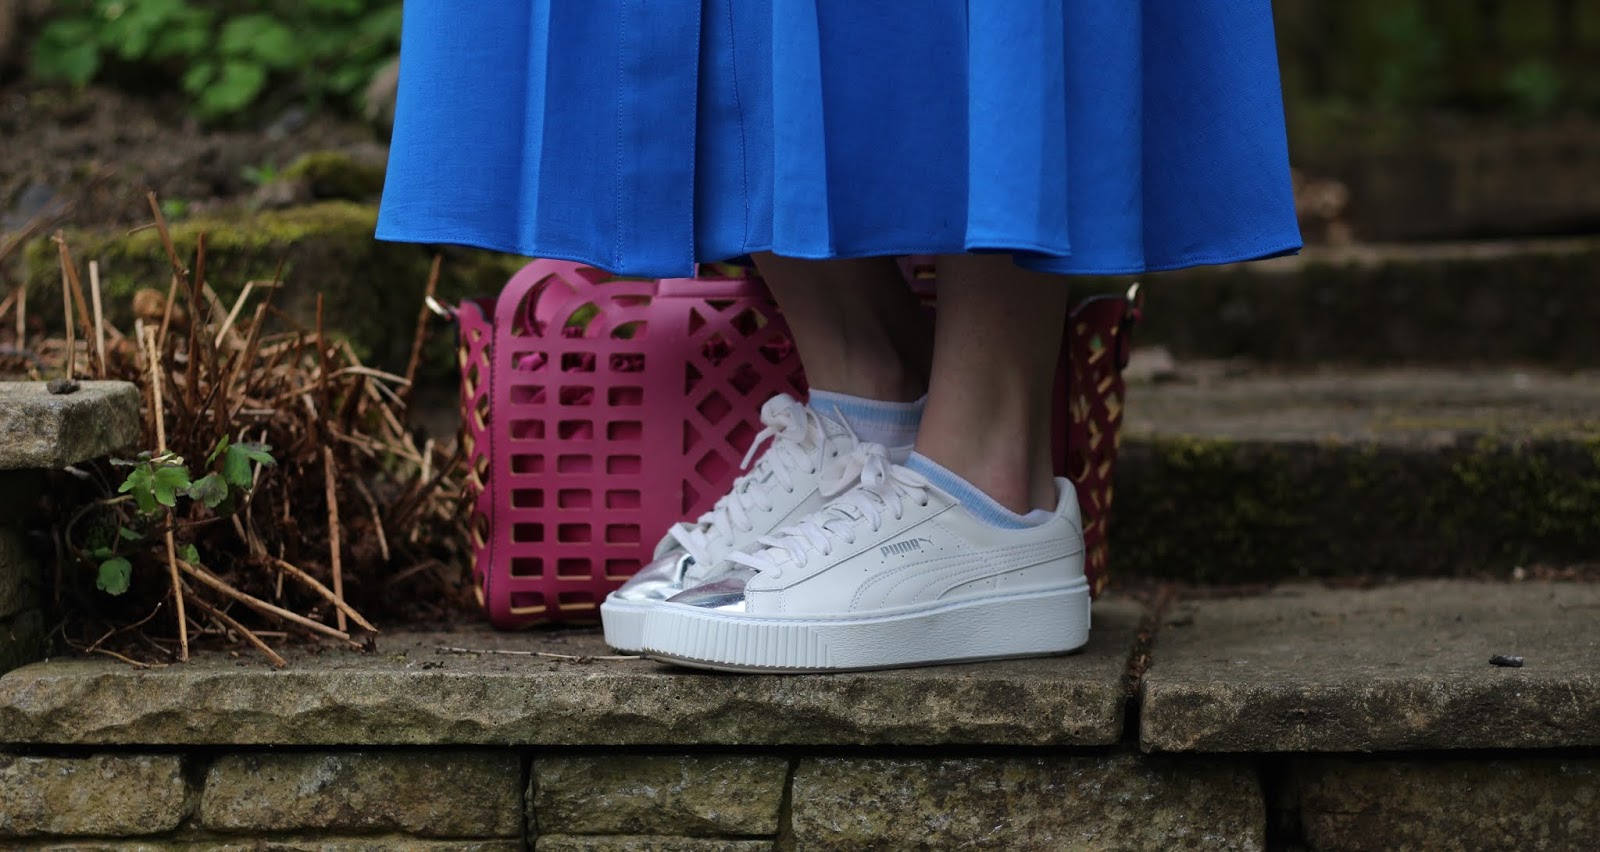 Blue midi-skirt, Turquoise jumper and Pink Basket Bag | Fake Fabulous